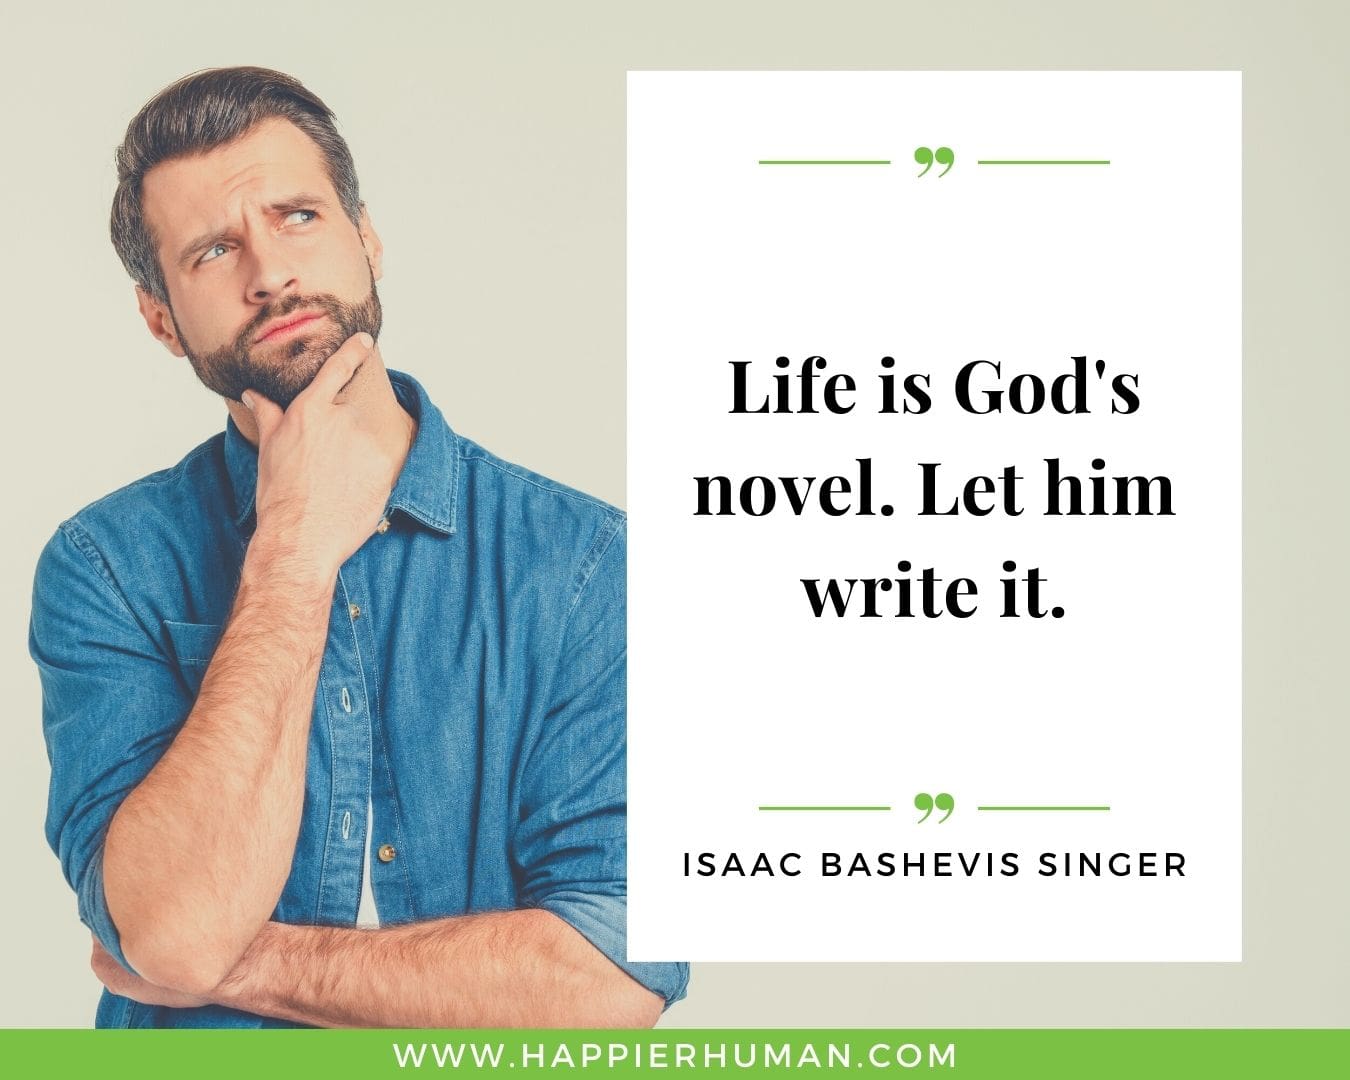 Overthinking Quotes - "Life is God's novel. Let him write it." - Isaac Bashevis Singer